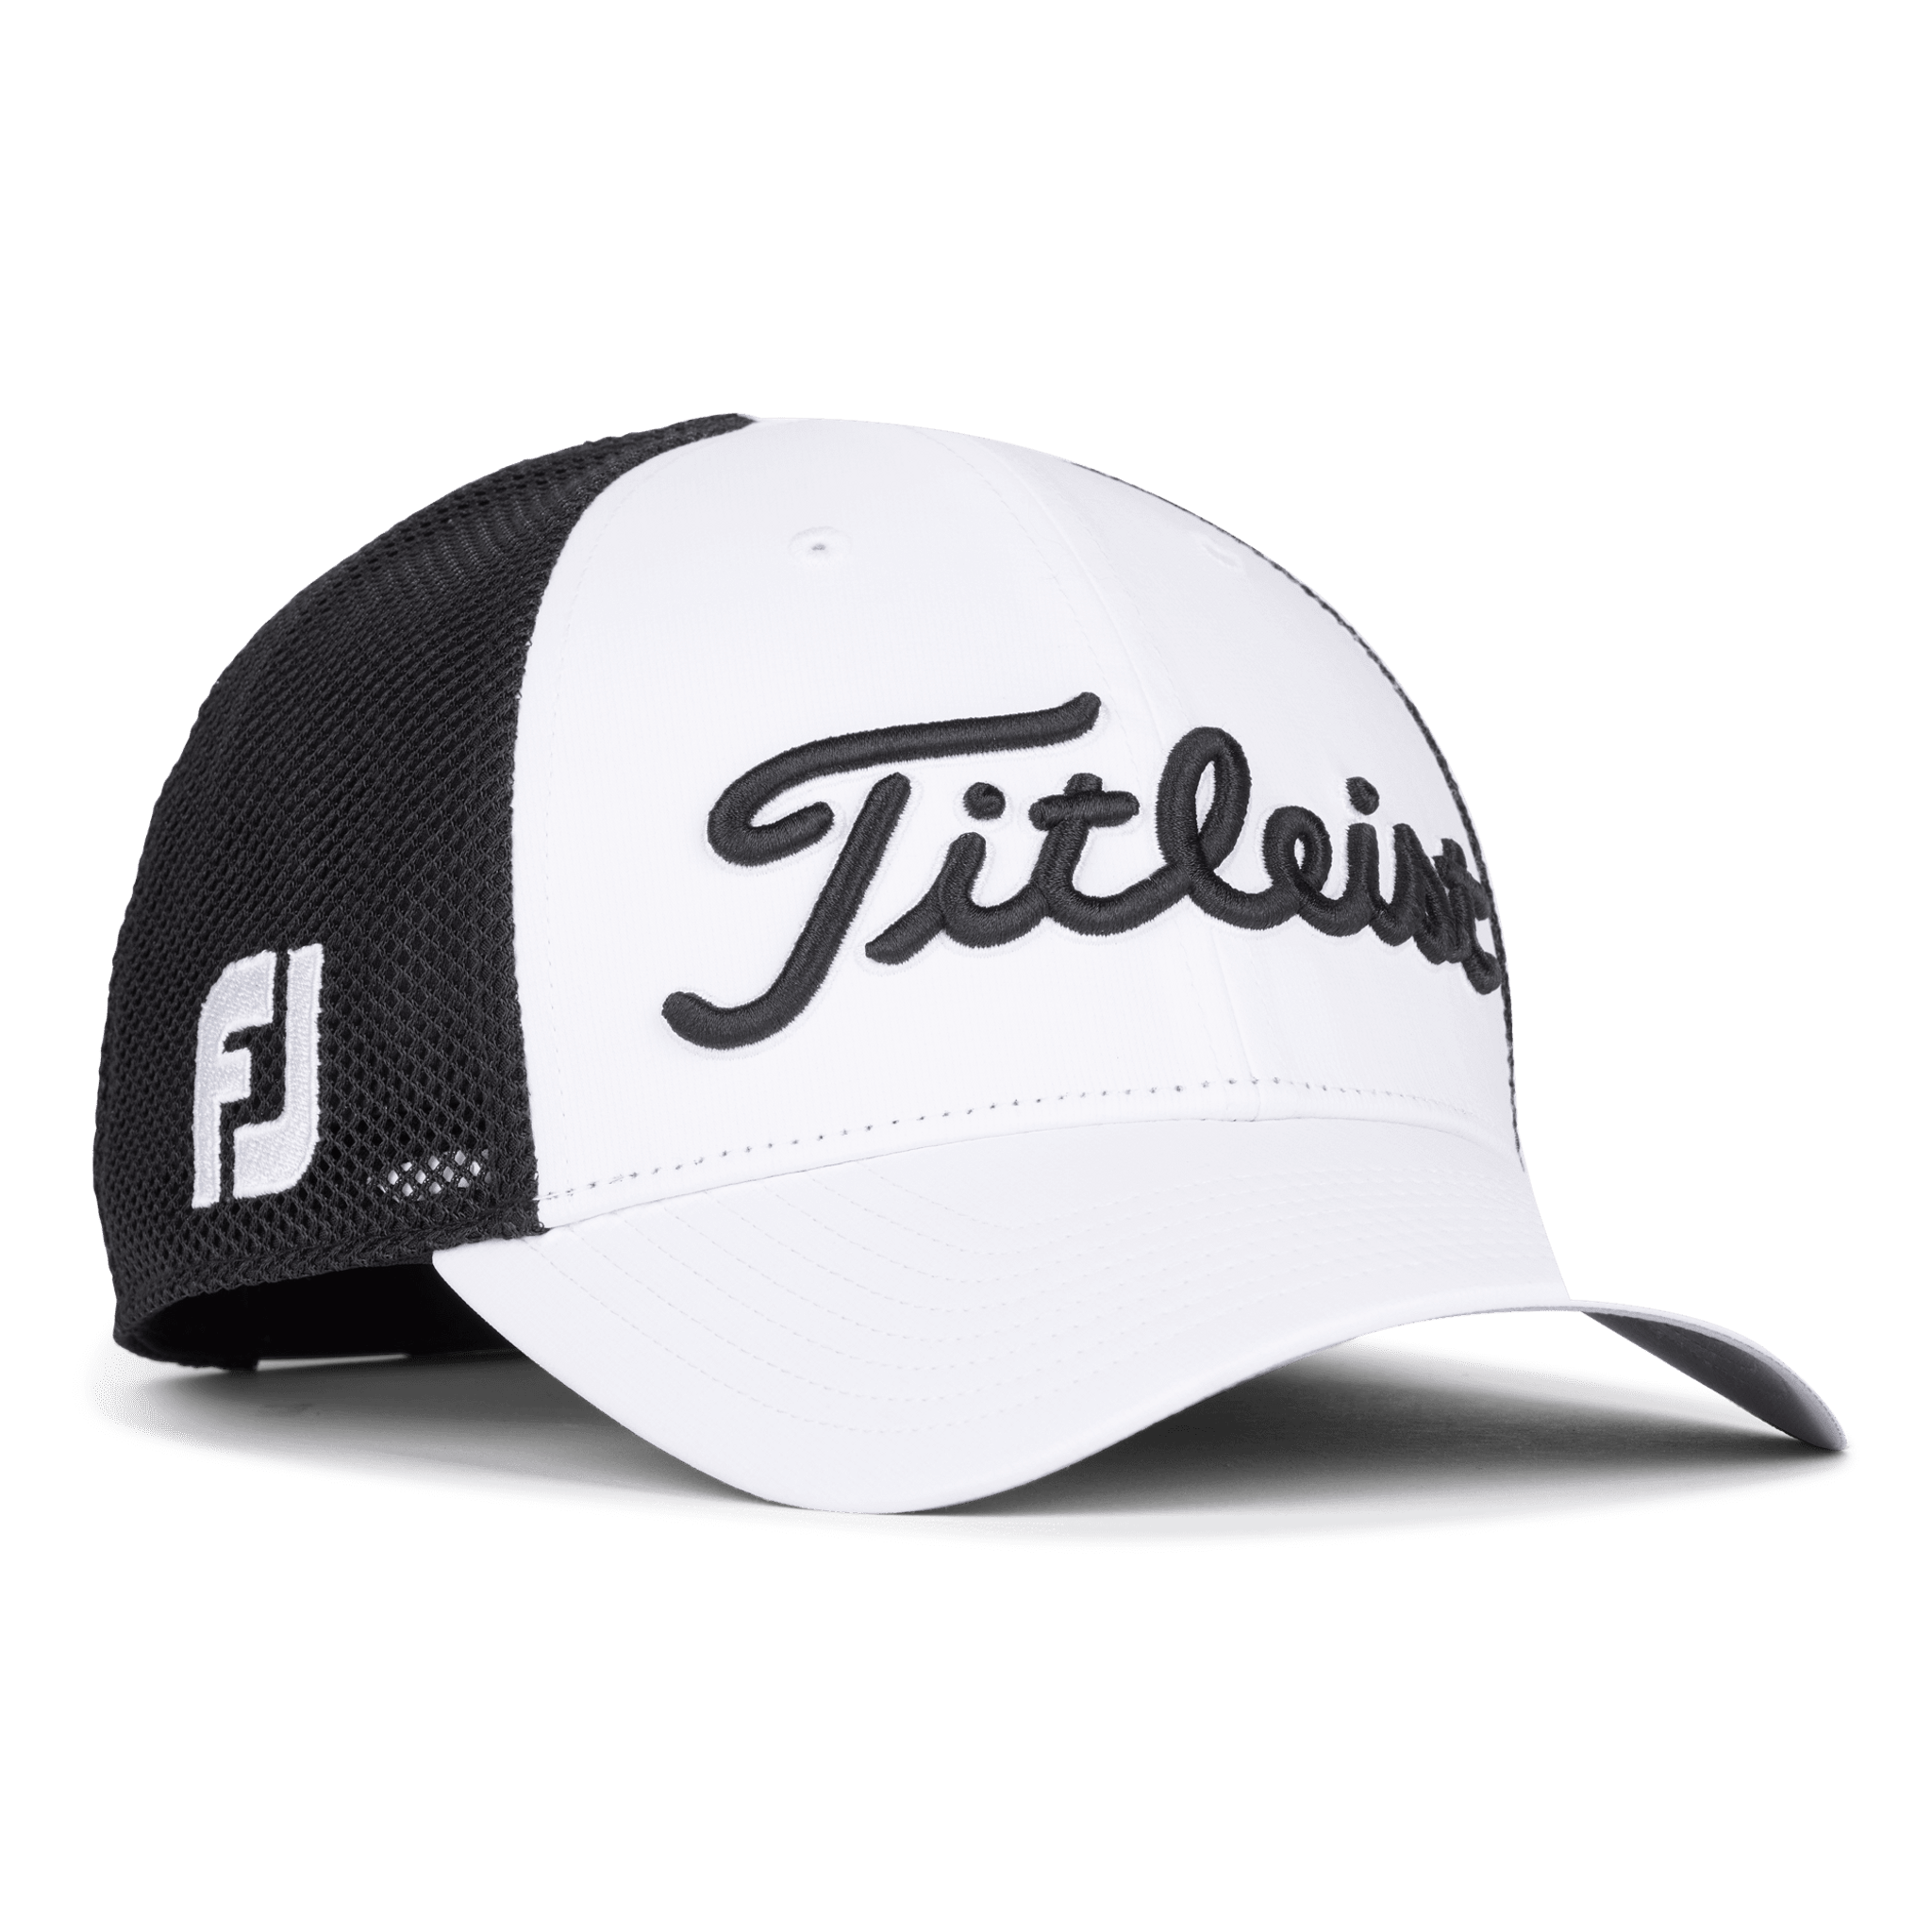 Titleist Tour Mesh Adjustable Baseball Cap